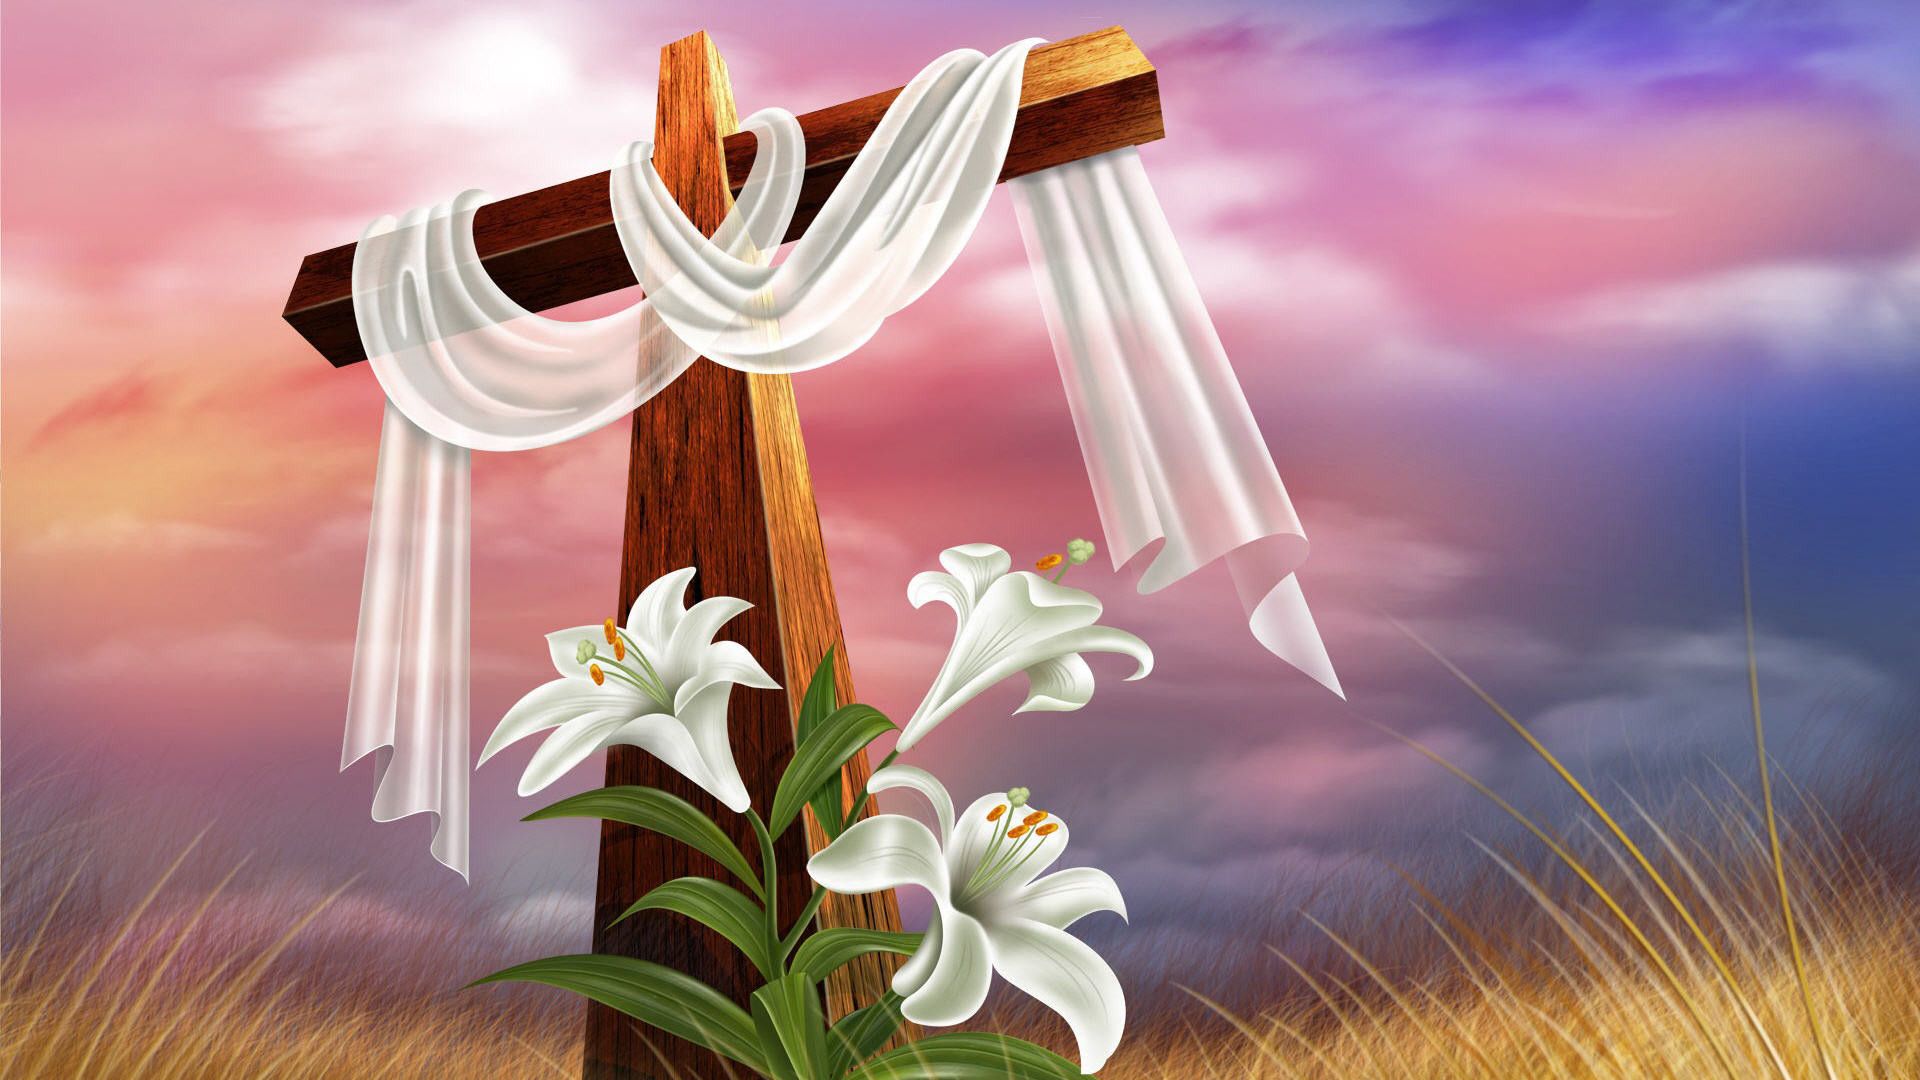 Free Easter Desktop Wallpaper Background Catholic